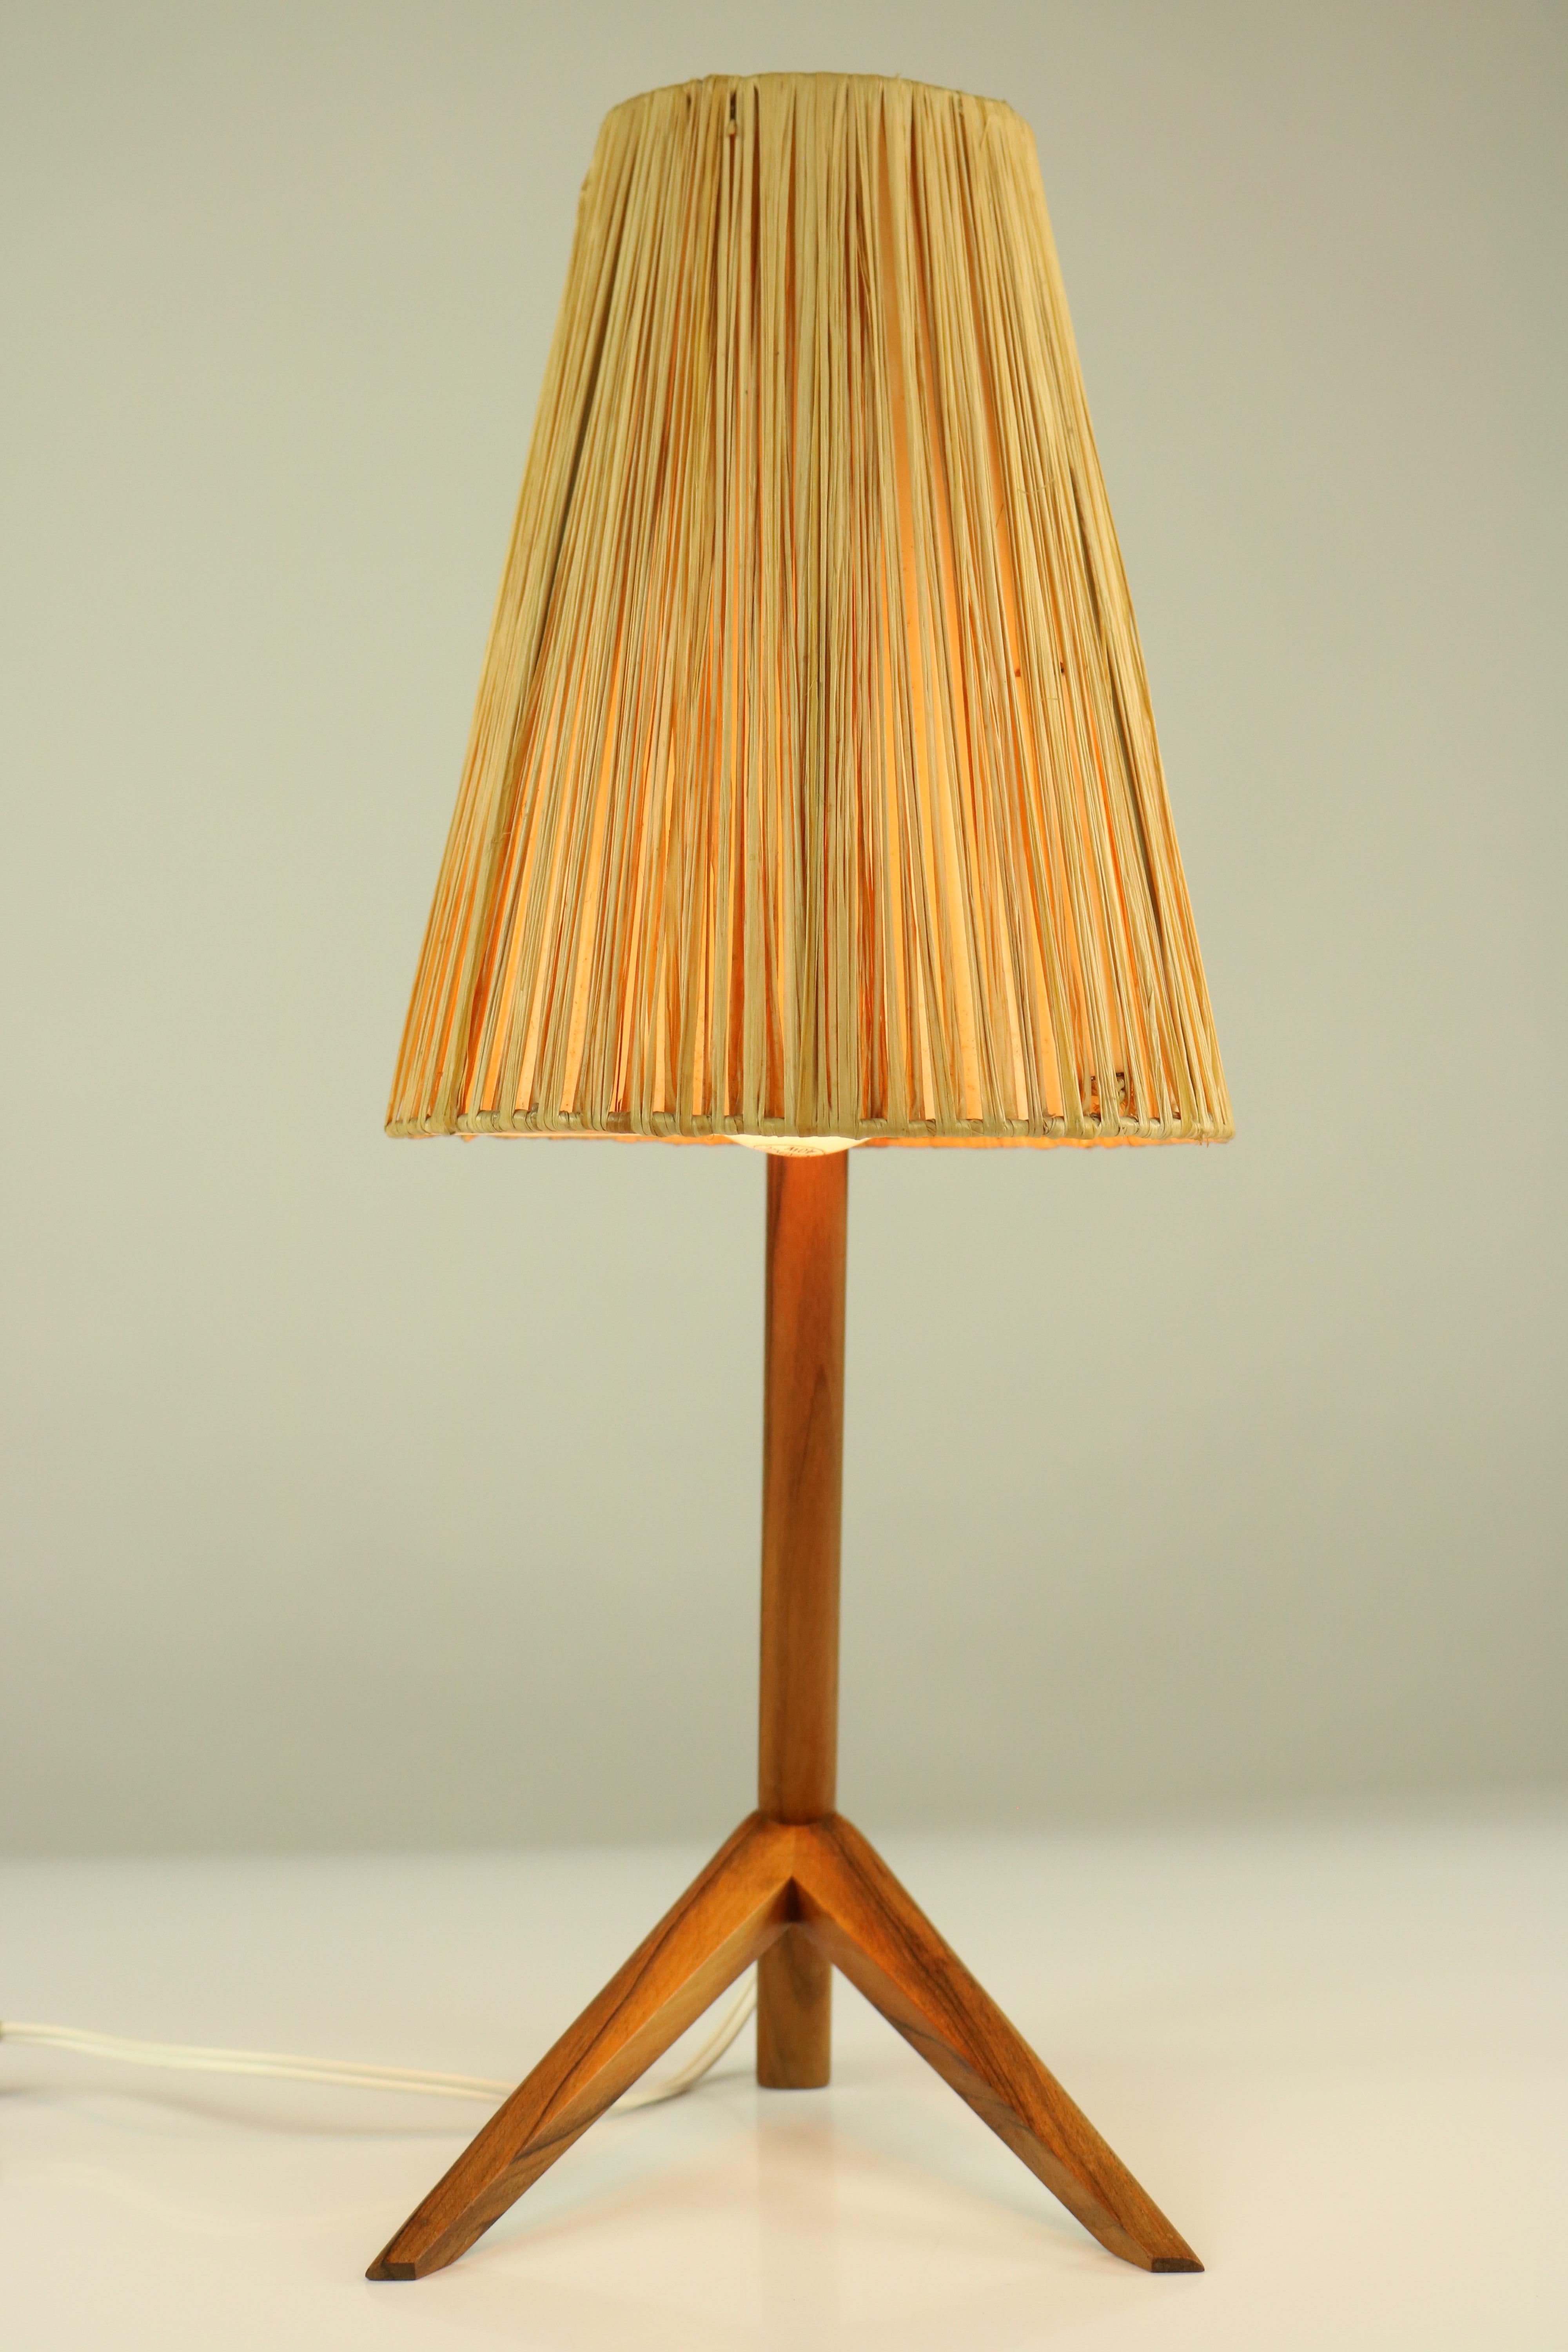 Woodwork Vintage Teak Table Lamp Crow Foot & Bast Shade Midcentury 1950s Austria Kalmar For Sale